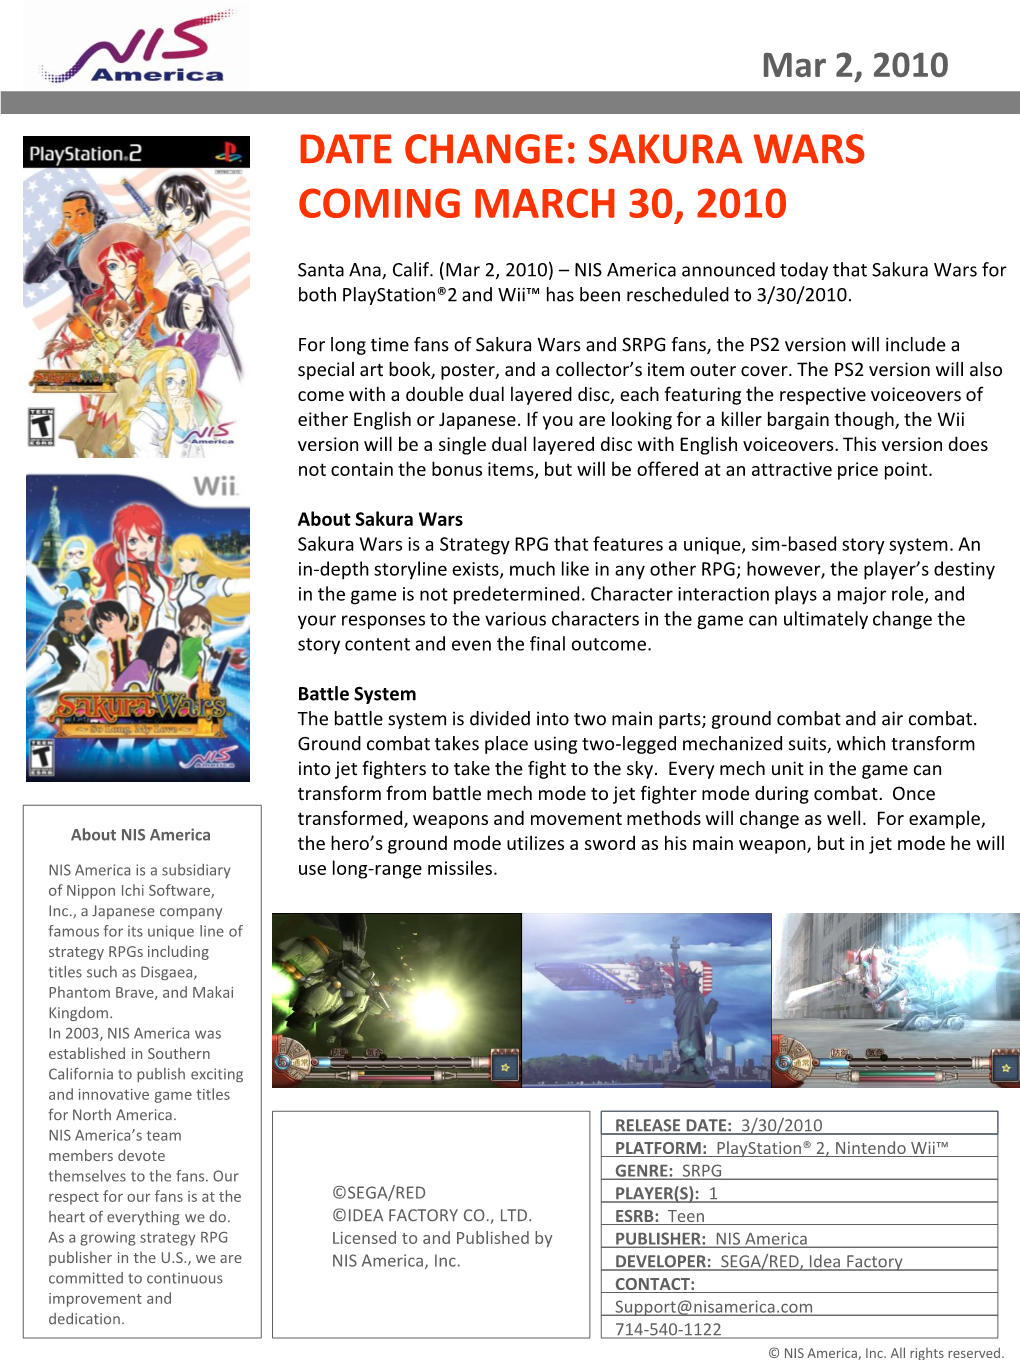 Sakura Wars Coming March 30, 2010